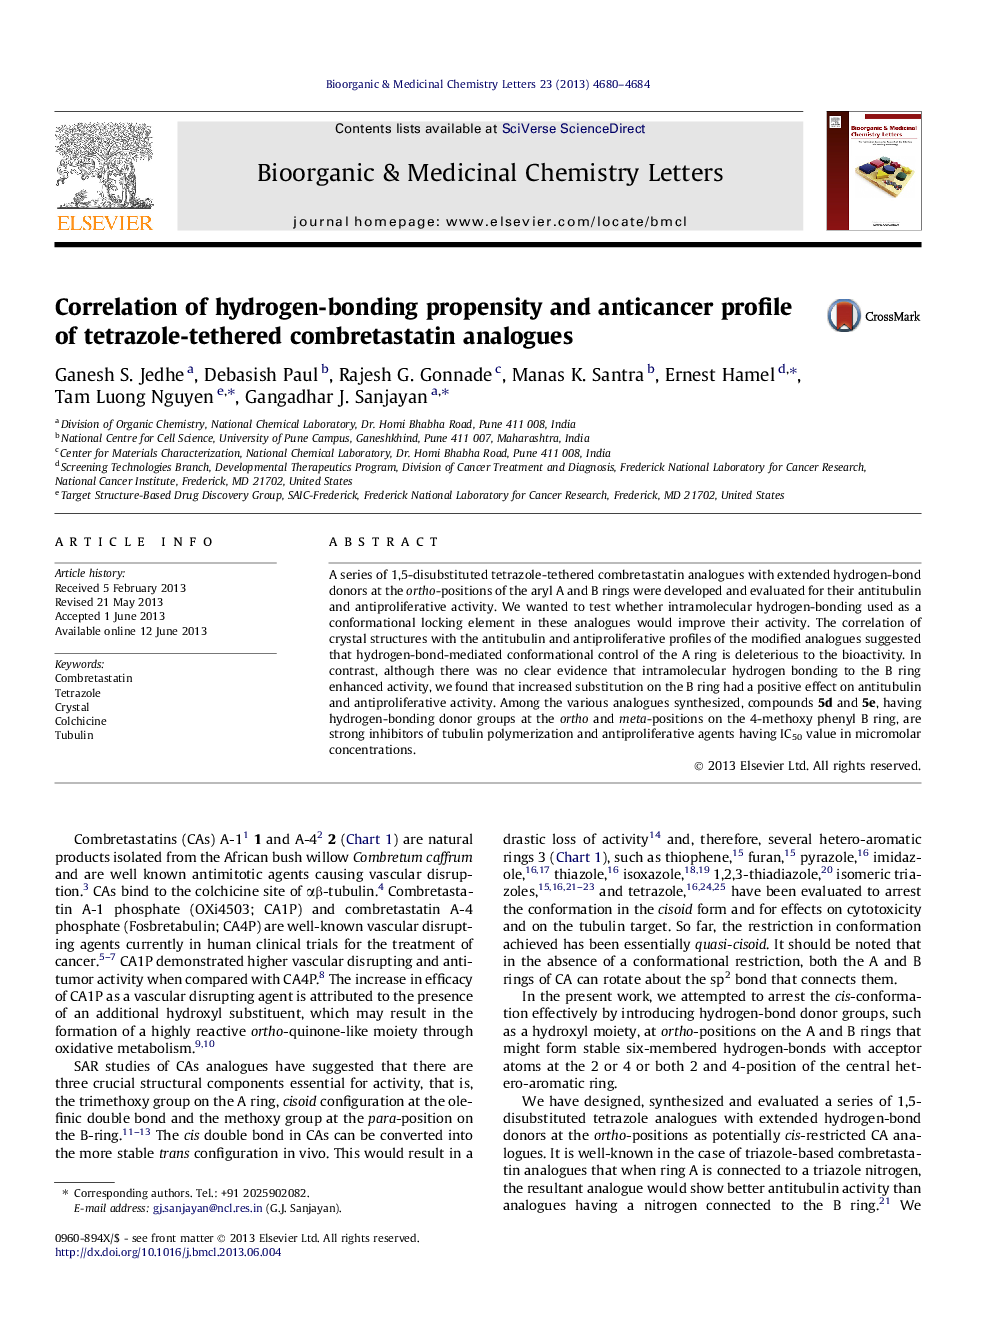 Correlation of hydrogen-bonding propensity and anticancer profile of tetrazole-tethered combretastatin analogues